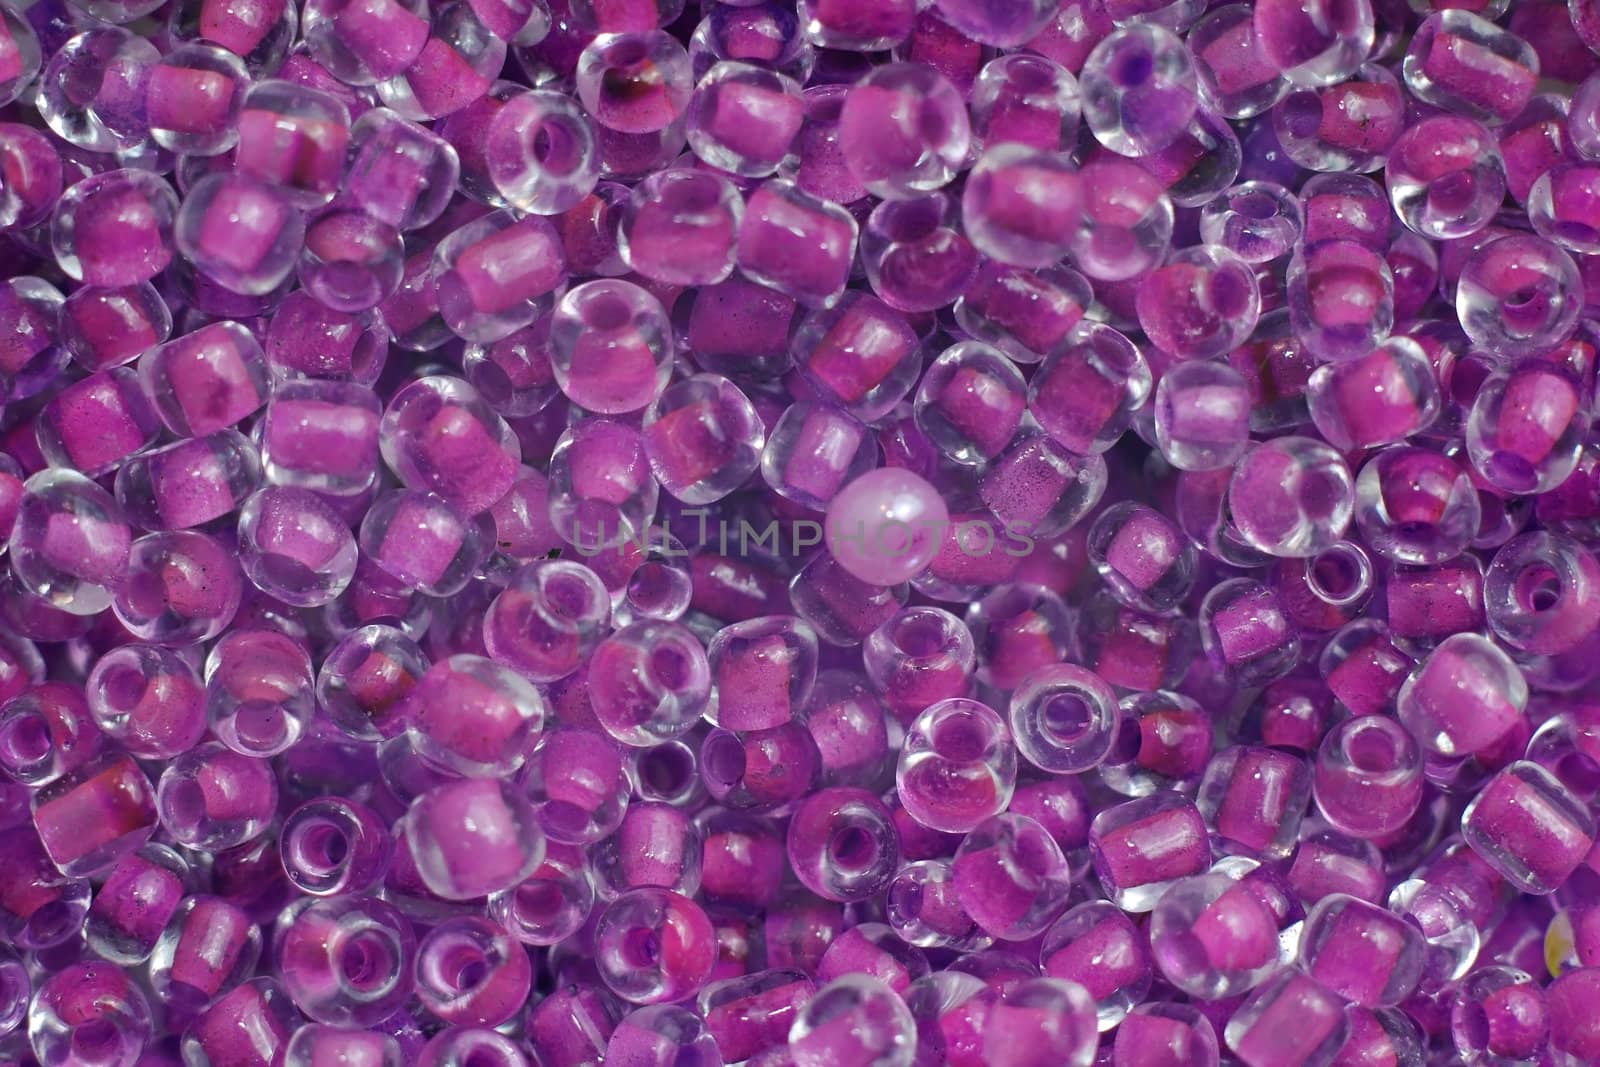 Group of purple plastic beads